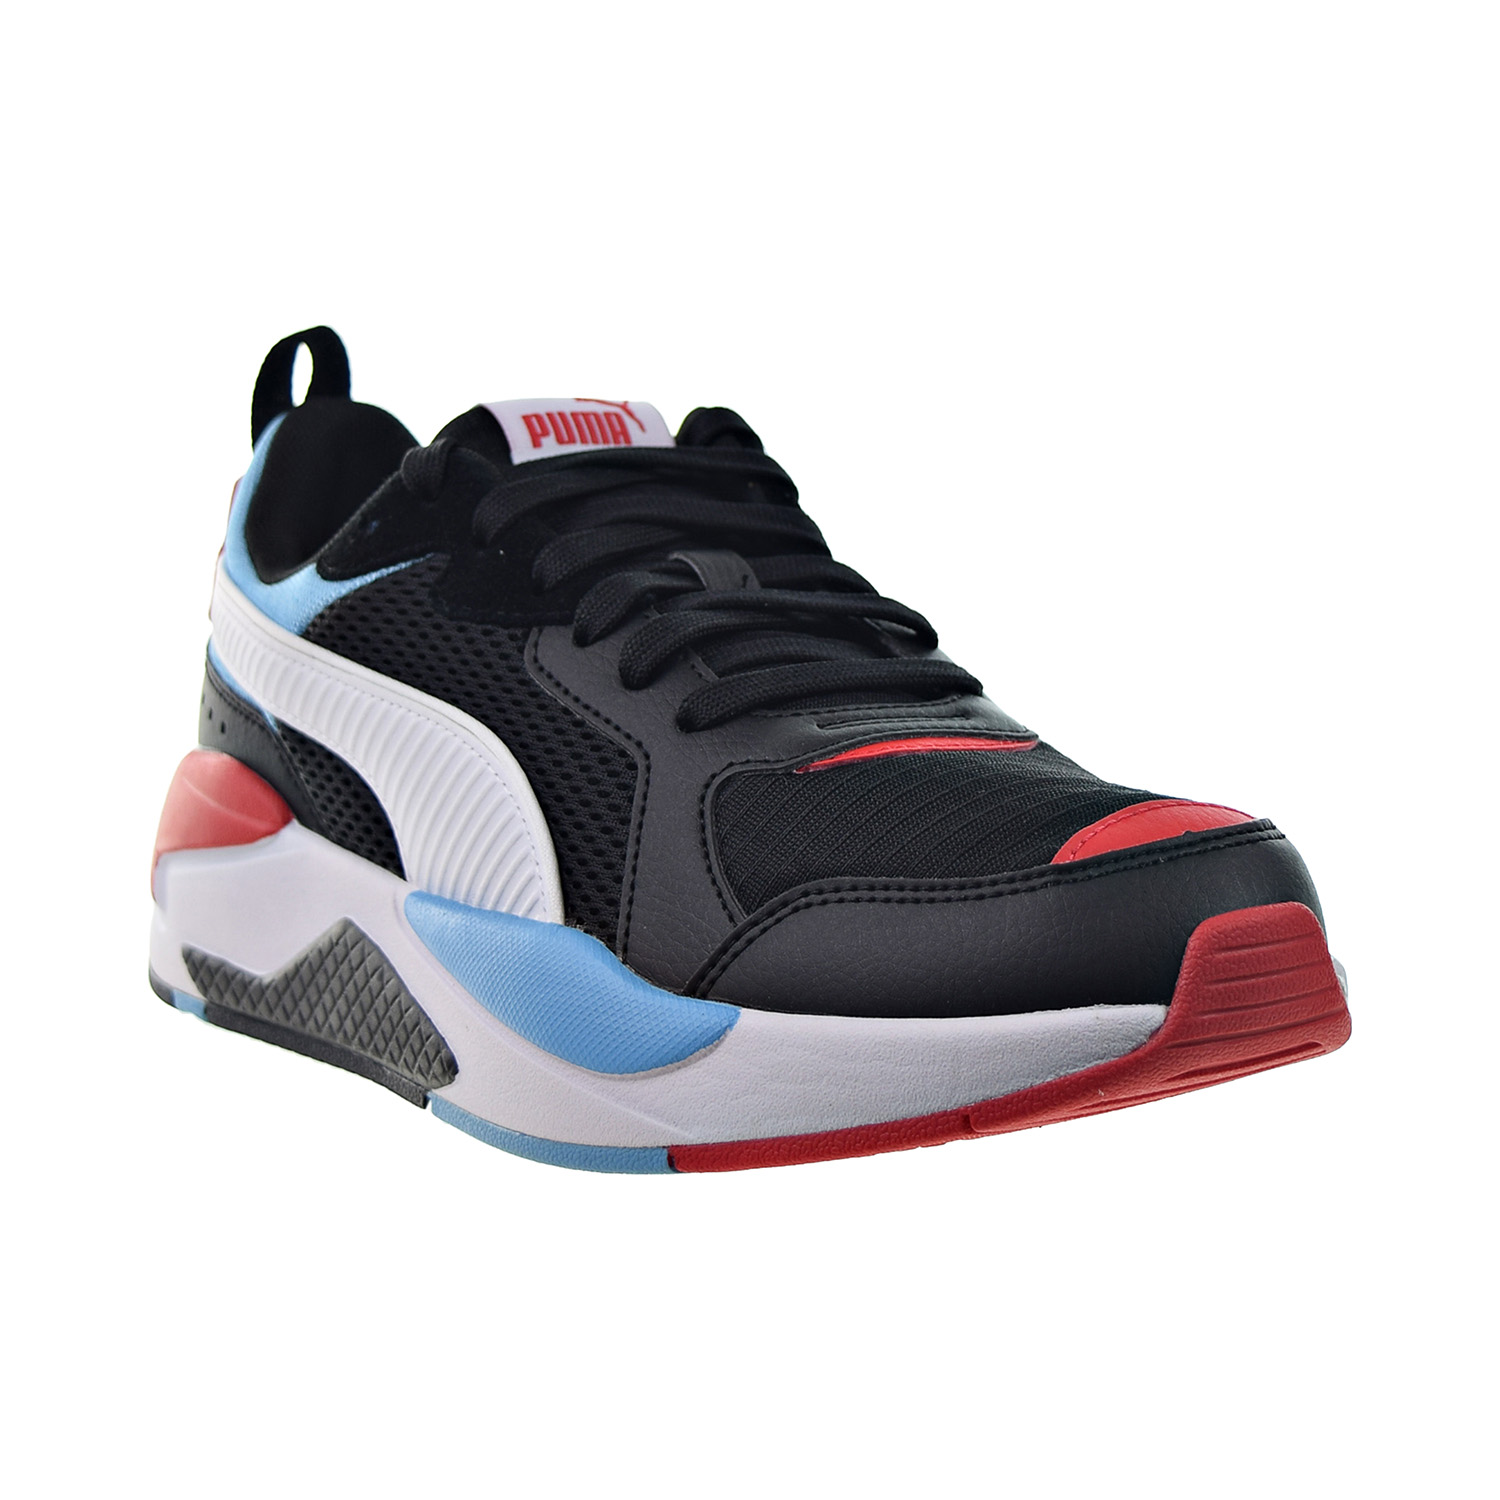 Puma X-Ray Color Block Men's Shoes Black-White-Blue-Red 373582-01 | eBay